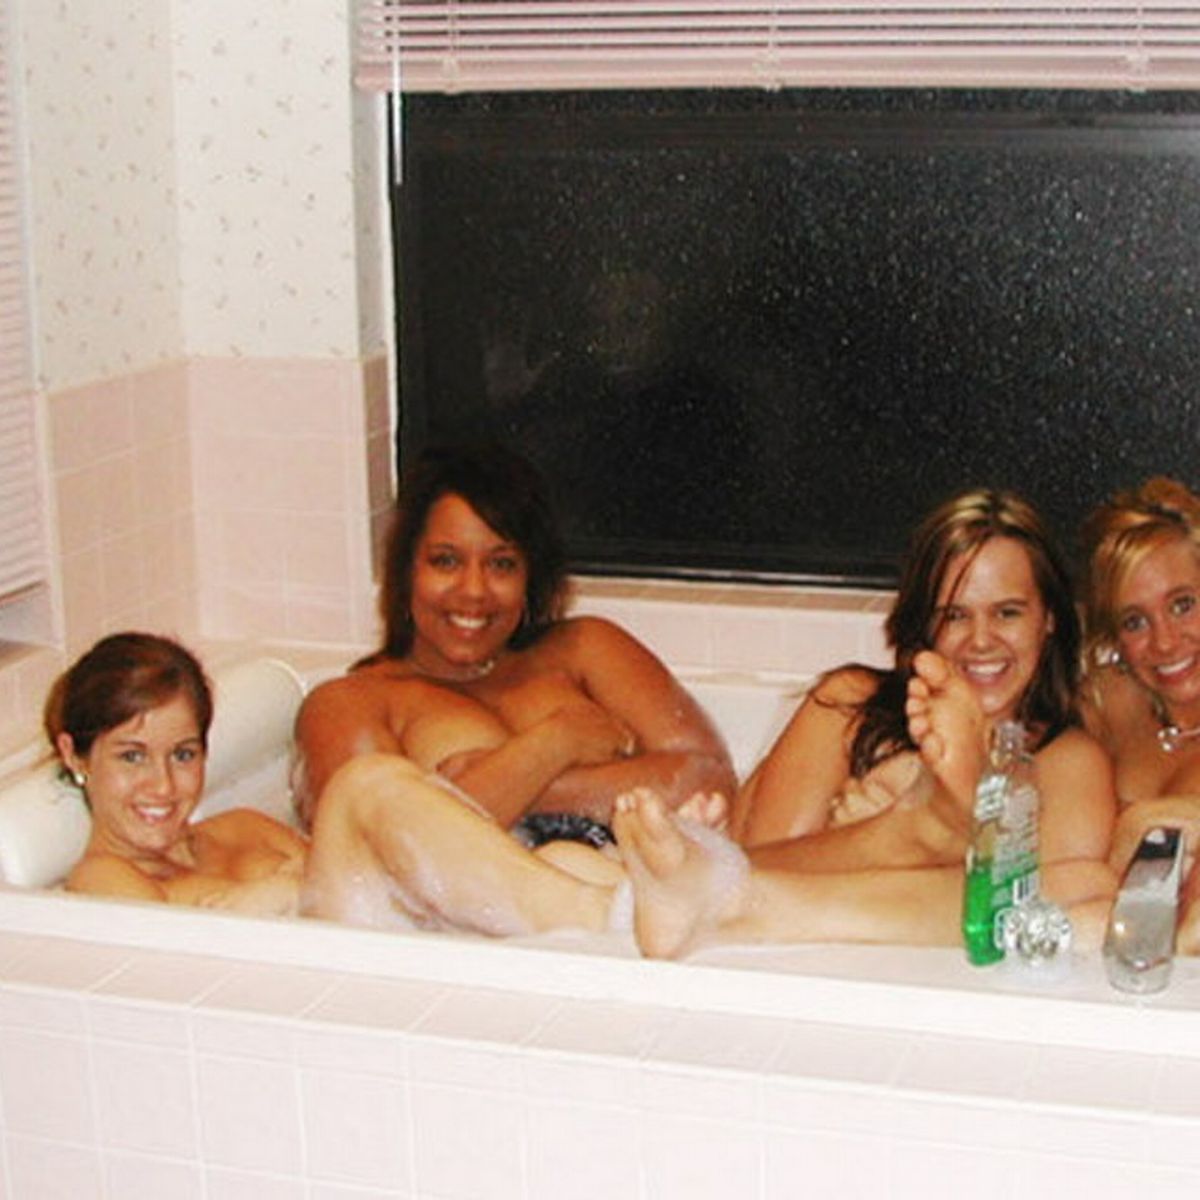 brittany dewing add women in bath naked photo